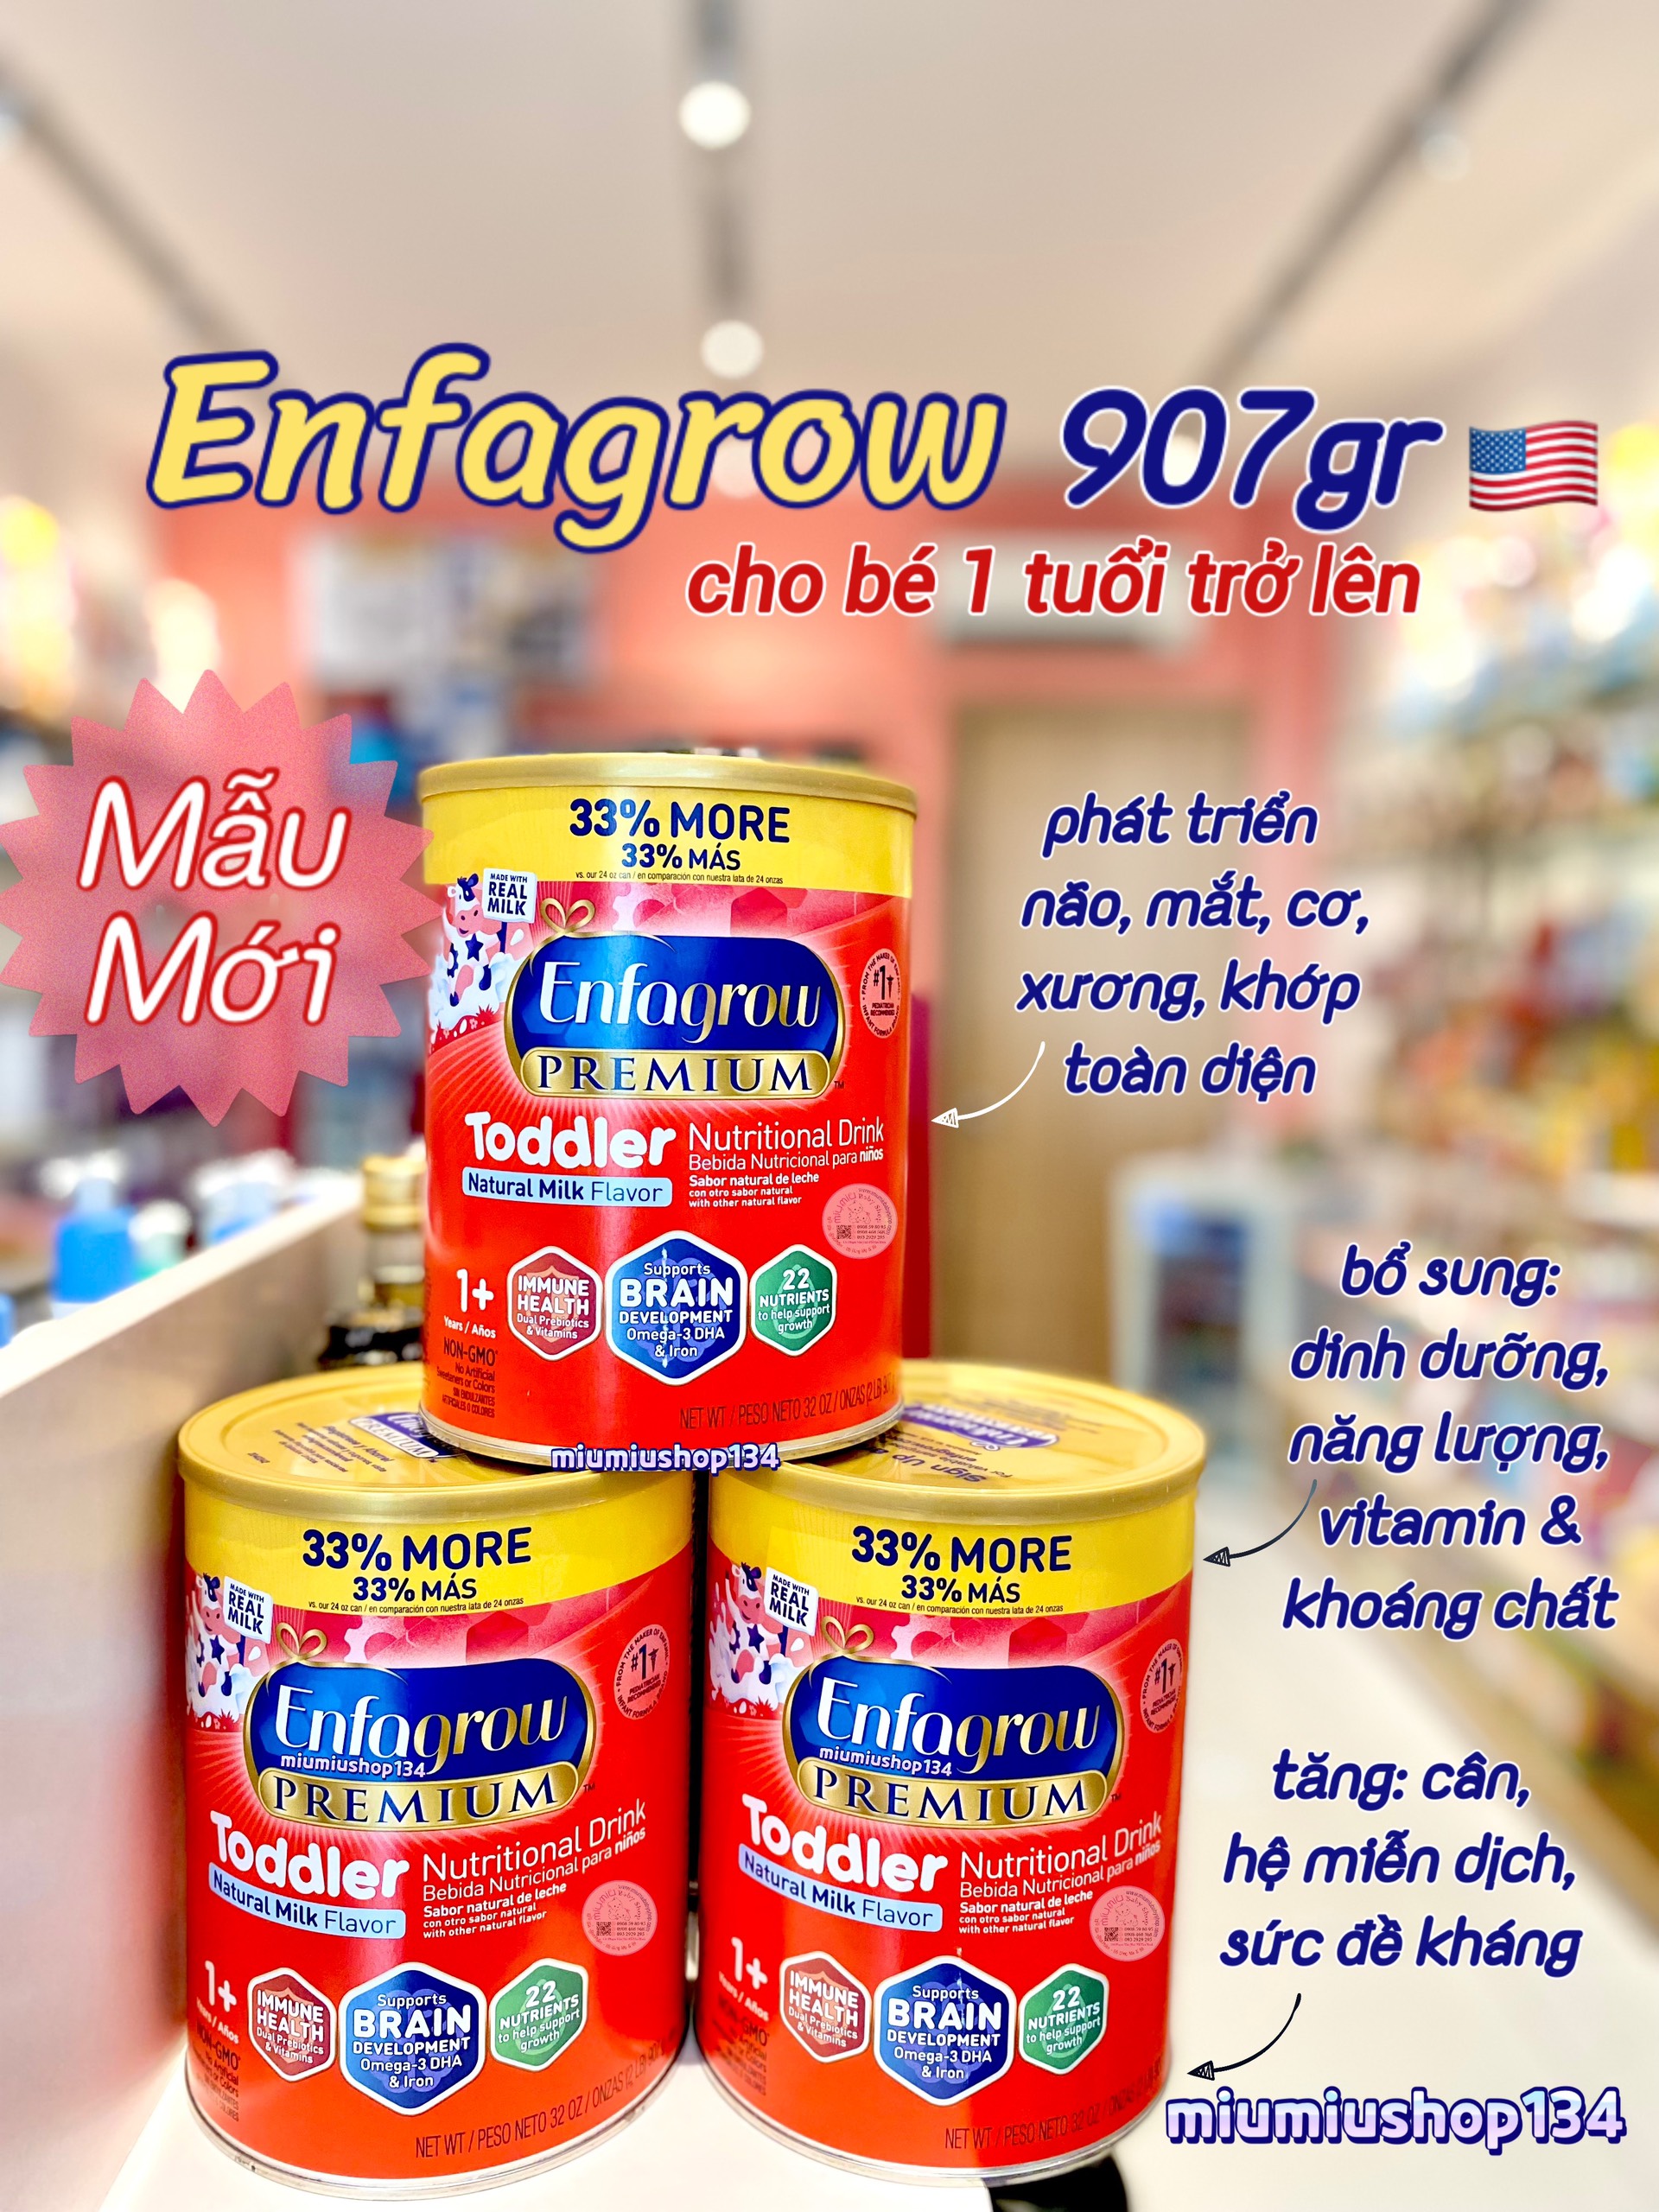 Sữa Enfagrow Premium Todder 907gr 🇺🇸